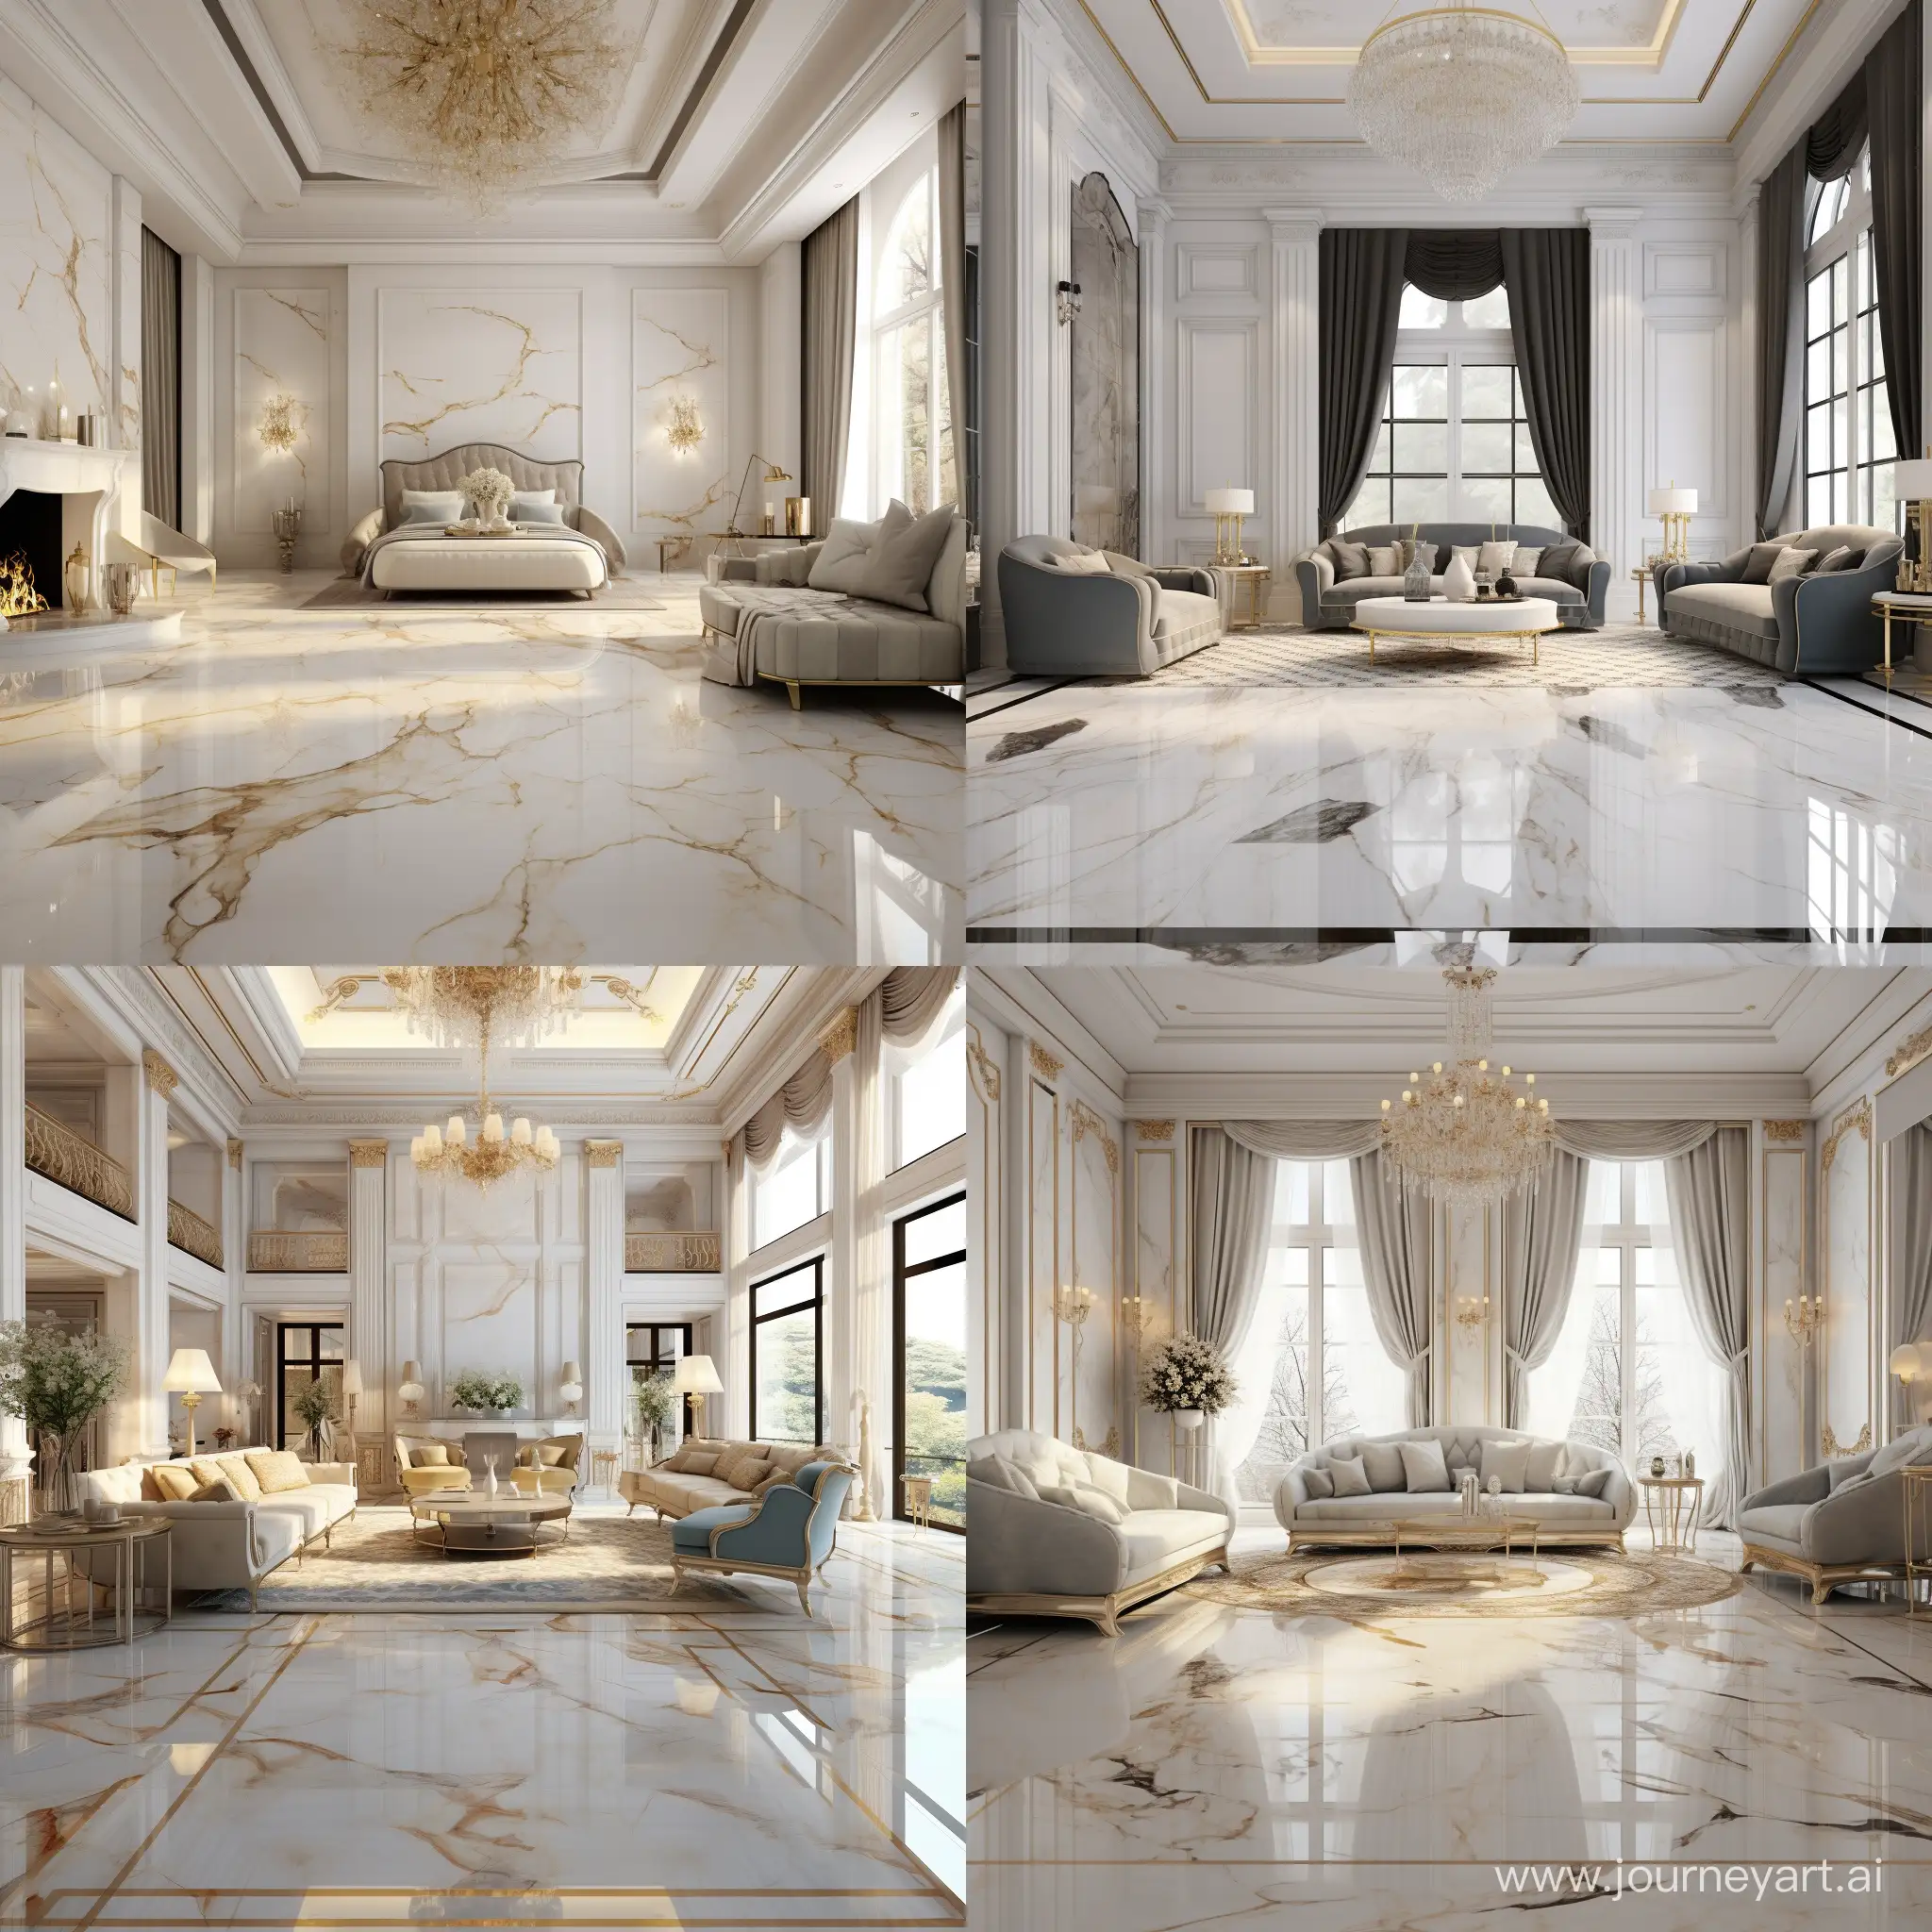 Elegant-Realistic-MarbleFloored-Room-with-Stylish-Furniture-and-Illuminating-Lights